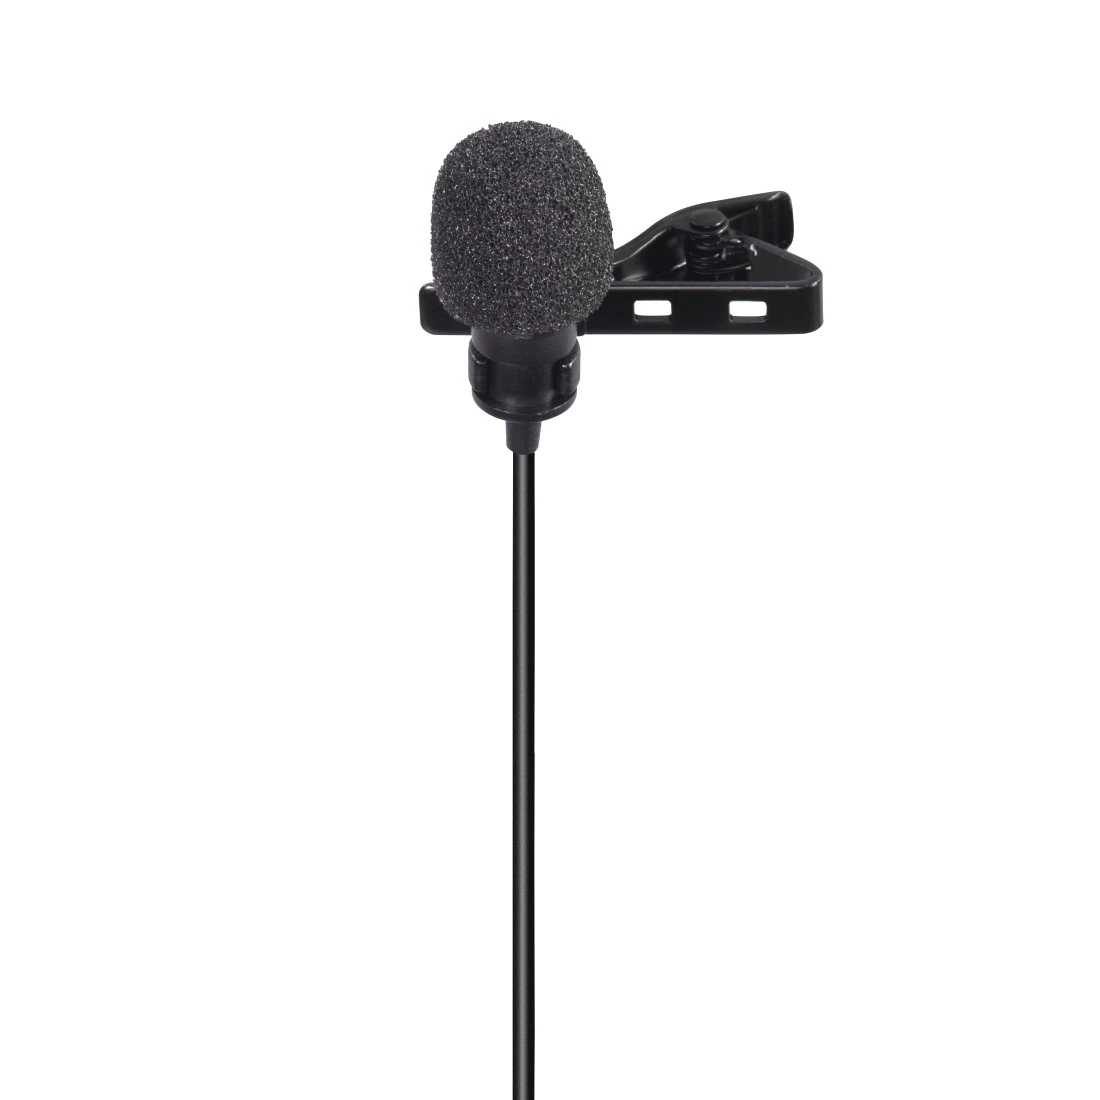 Microphone cravate filaire omnidirectionnel - Noir KOOLSTAR